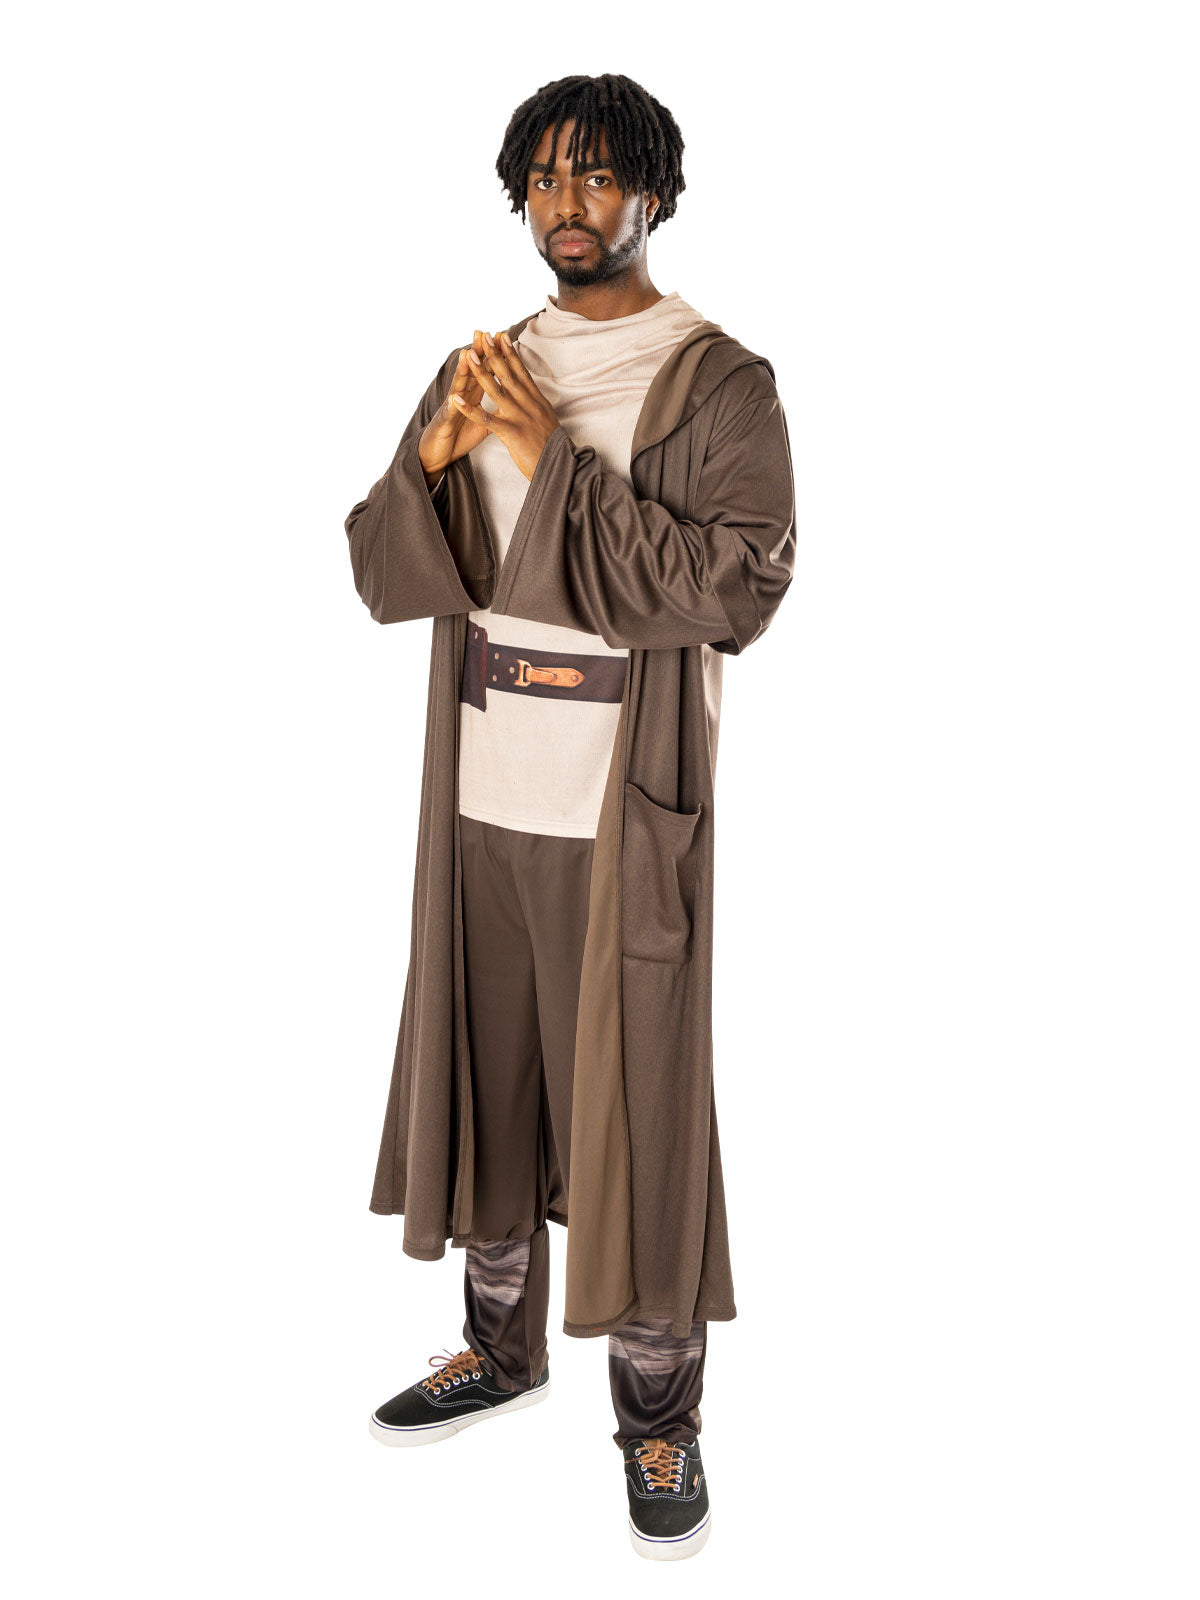 Obi Wan Kenobi Deluxe Costume